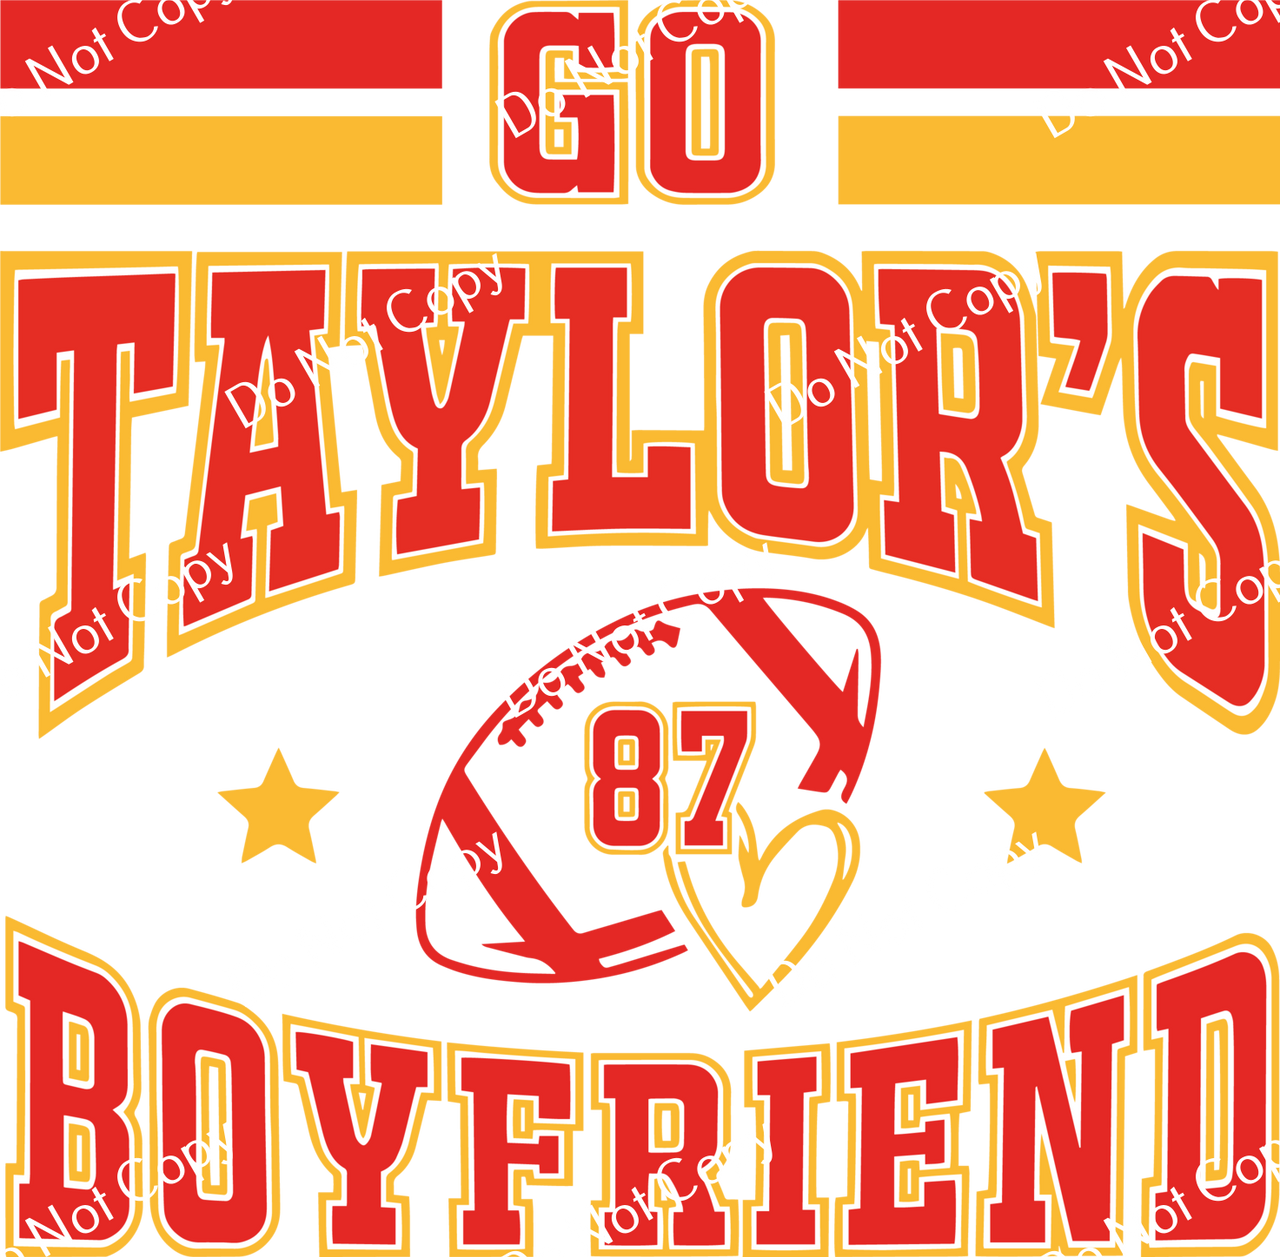 ColorSplash Ultra | Go Taylor's Boyfriend